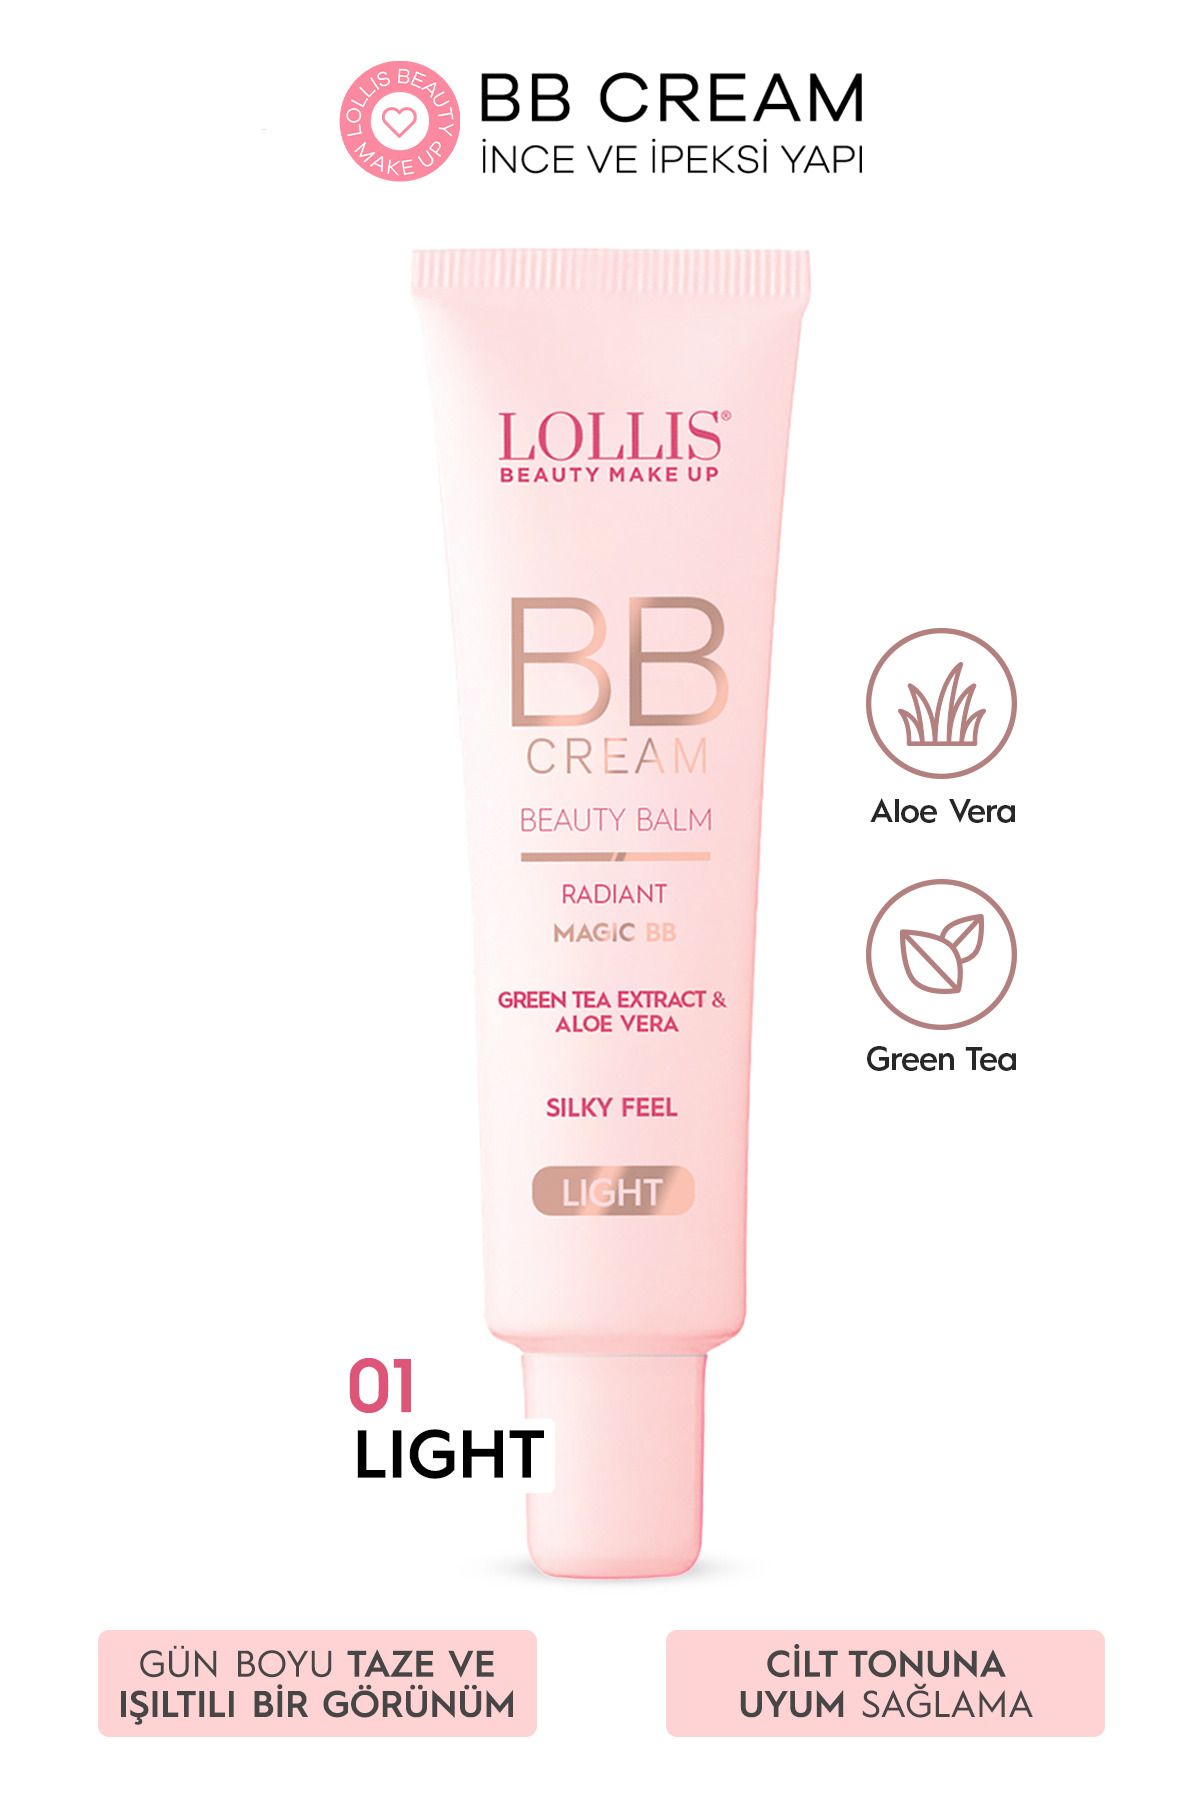 Lollis BB Cream 01 Light/Açık Ton Nemlendirici Etkili Doğal Kapatıcı , Aloe Vera, Green Tea Extract 35ml